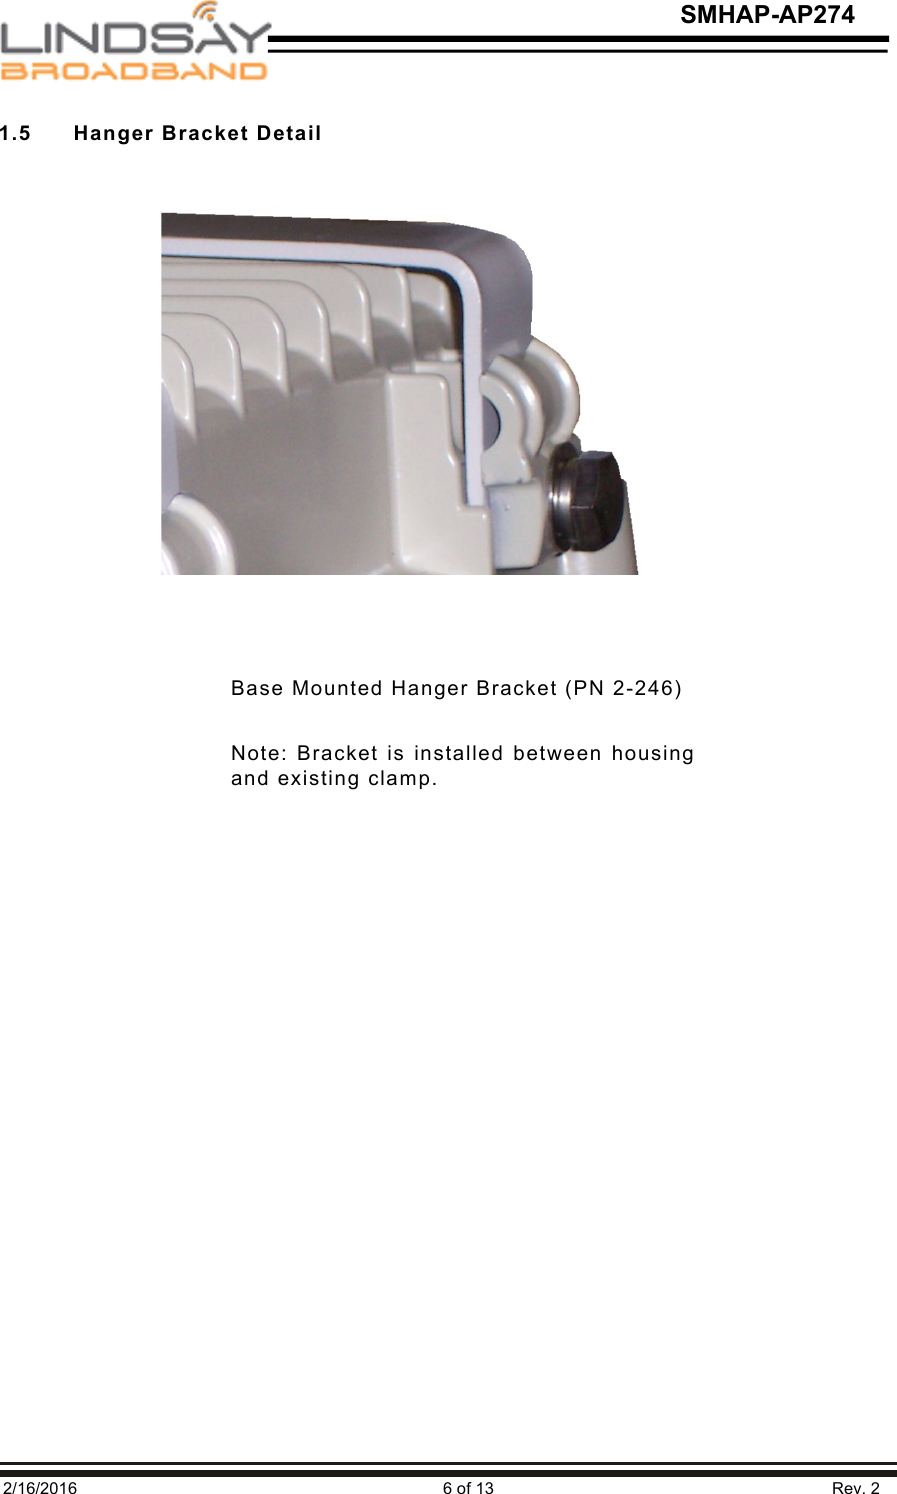   2/16/2016                                                                               6 of 13                                                                         Rev. 2 SMHAP-AP274 1.5   Hanger Bracket Detail          Base Mounted Hanger Bracket (PN 2-246)   Note: Bracket is installed between housing and existing clamp. 